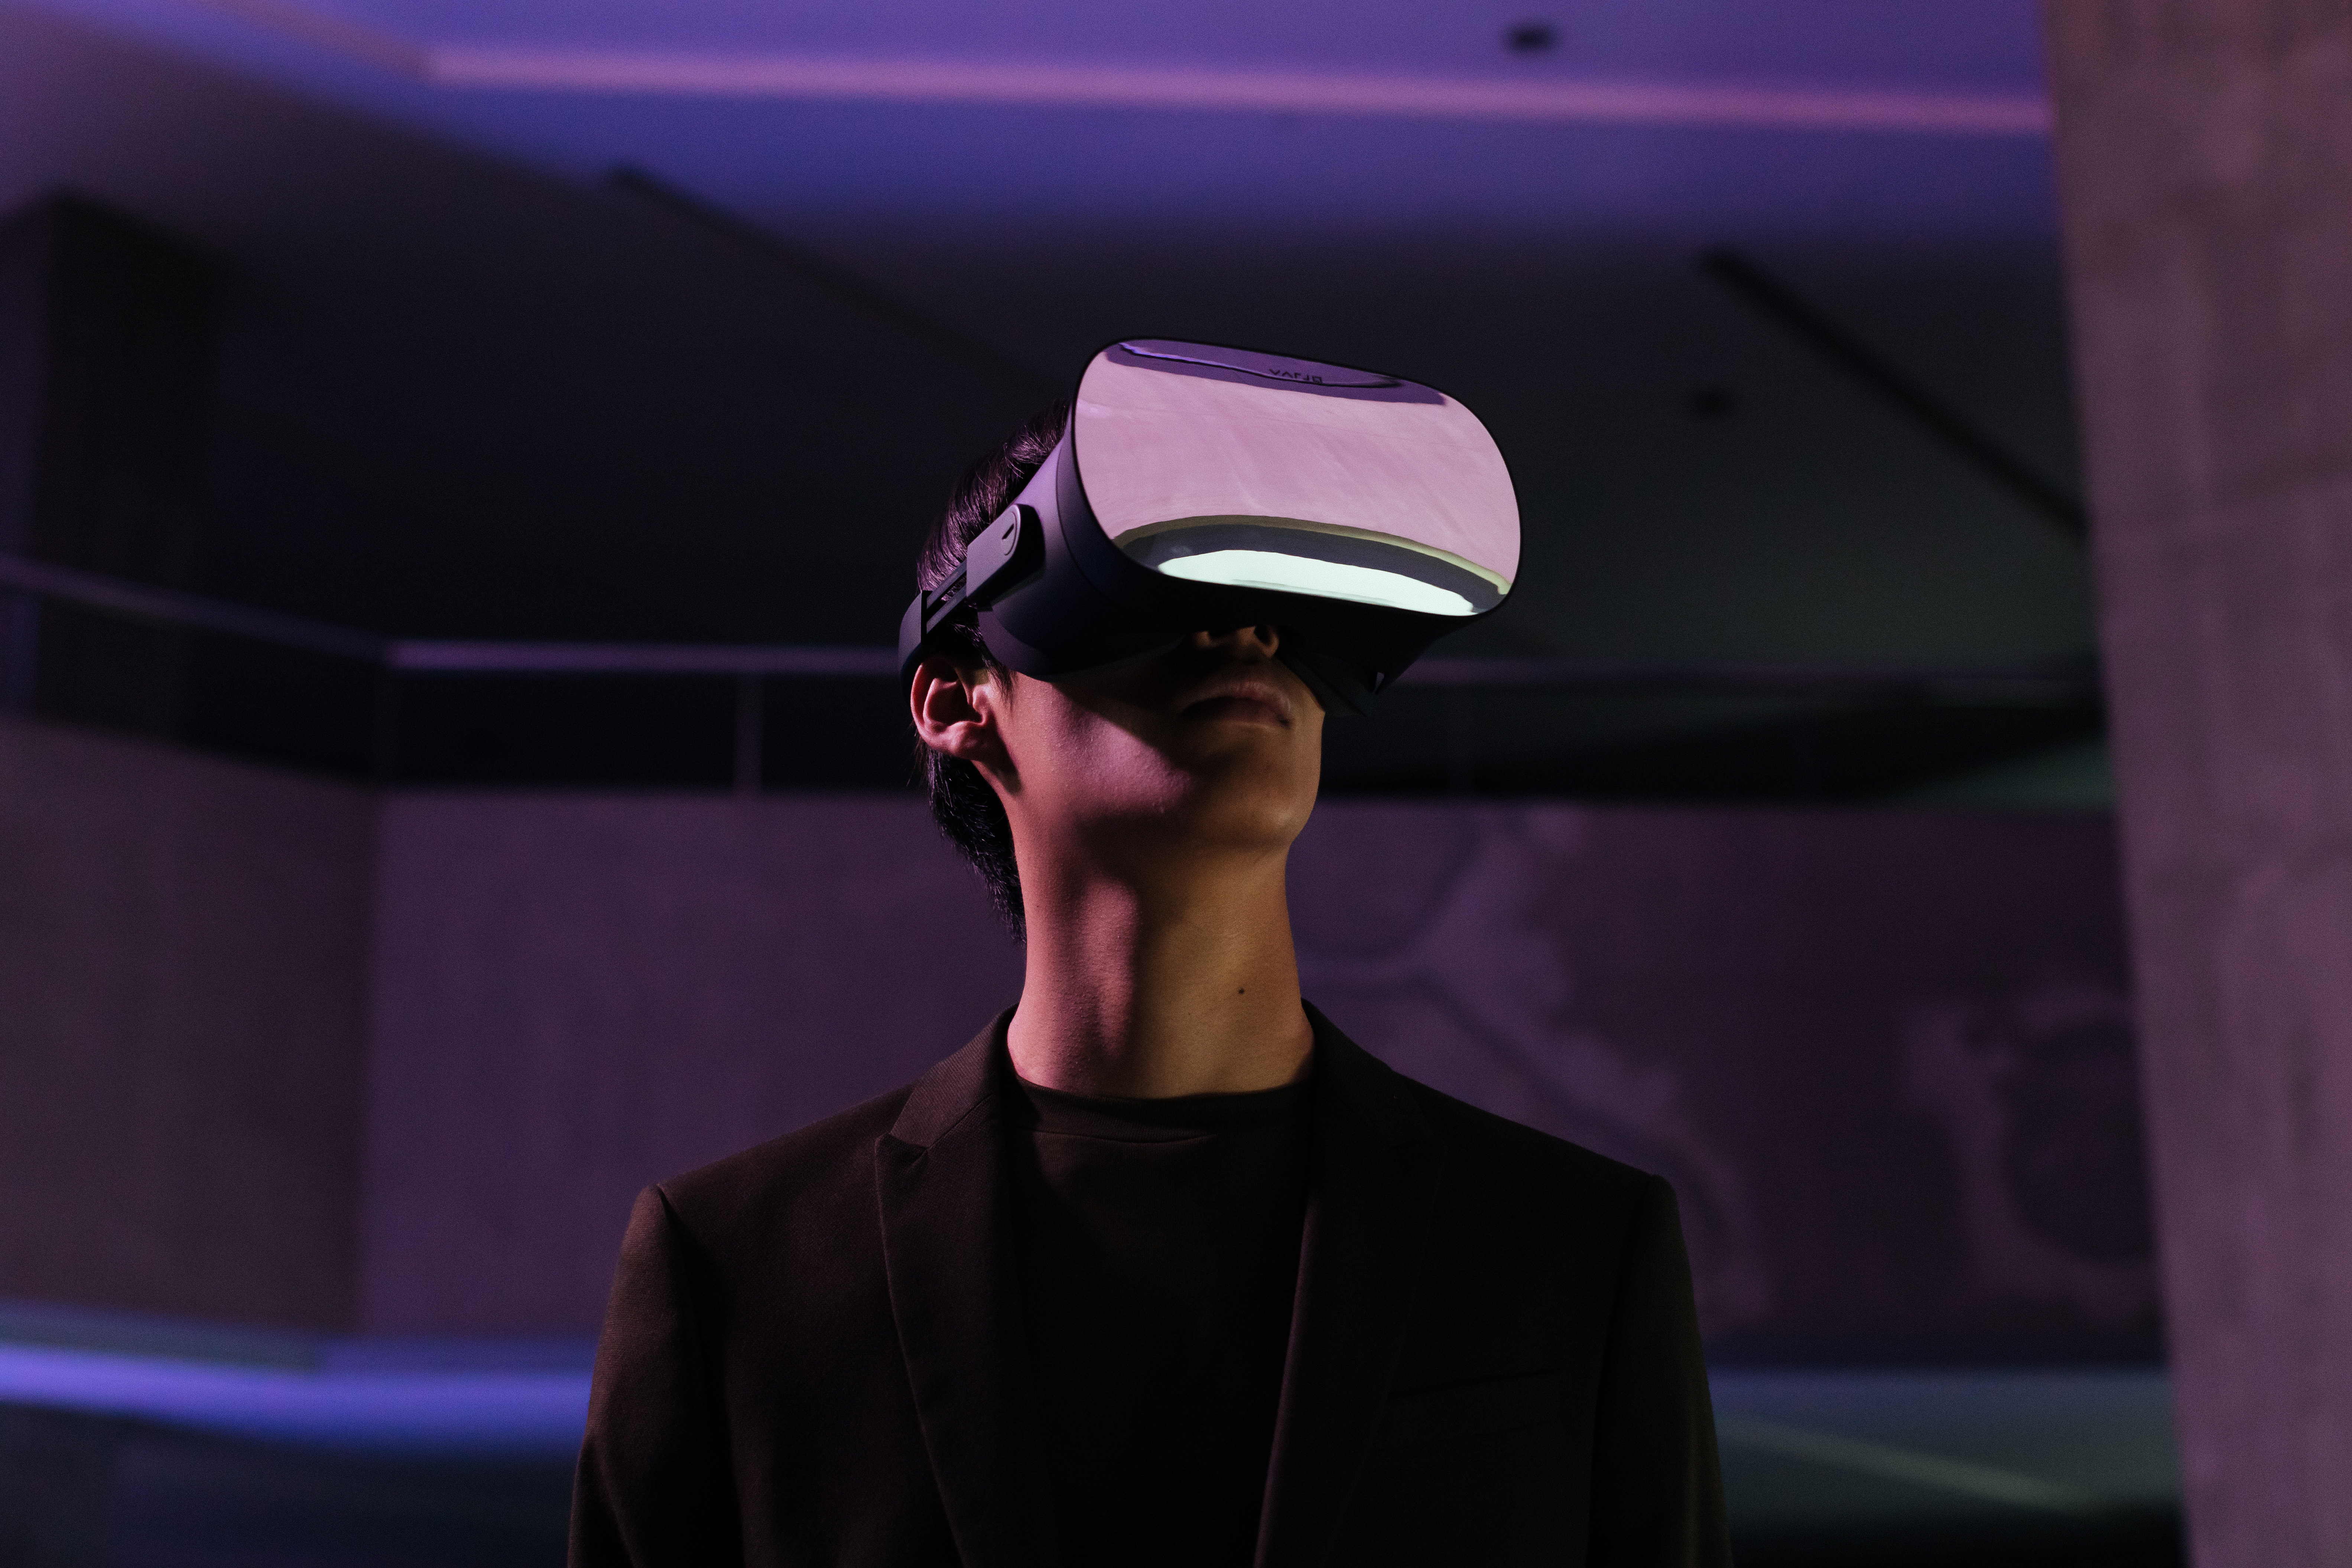 VR-headset-future-violet-tones